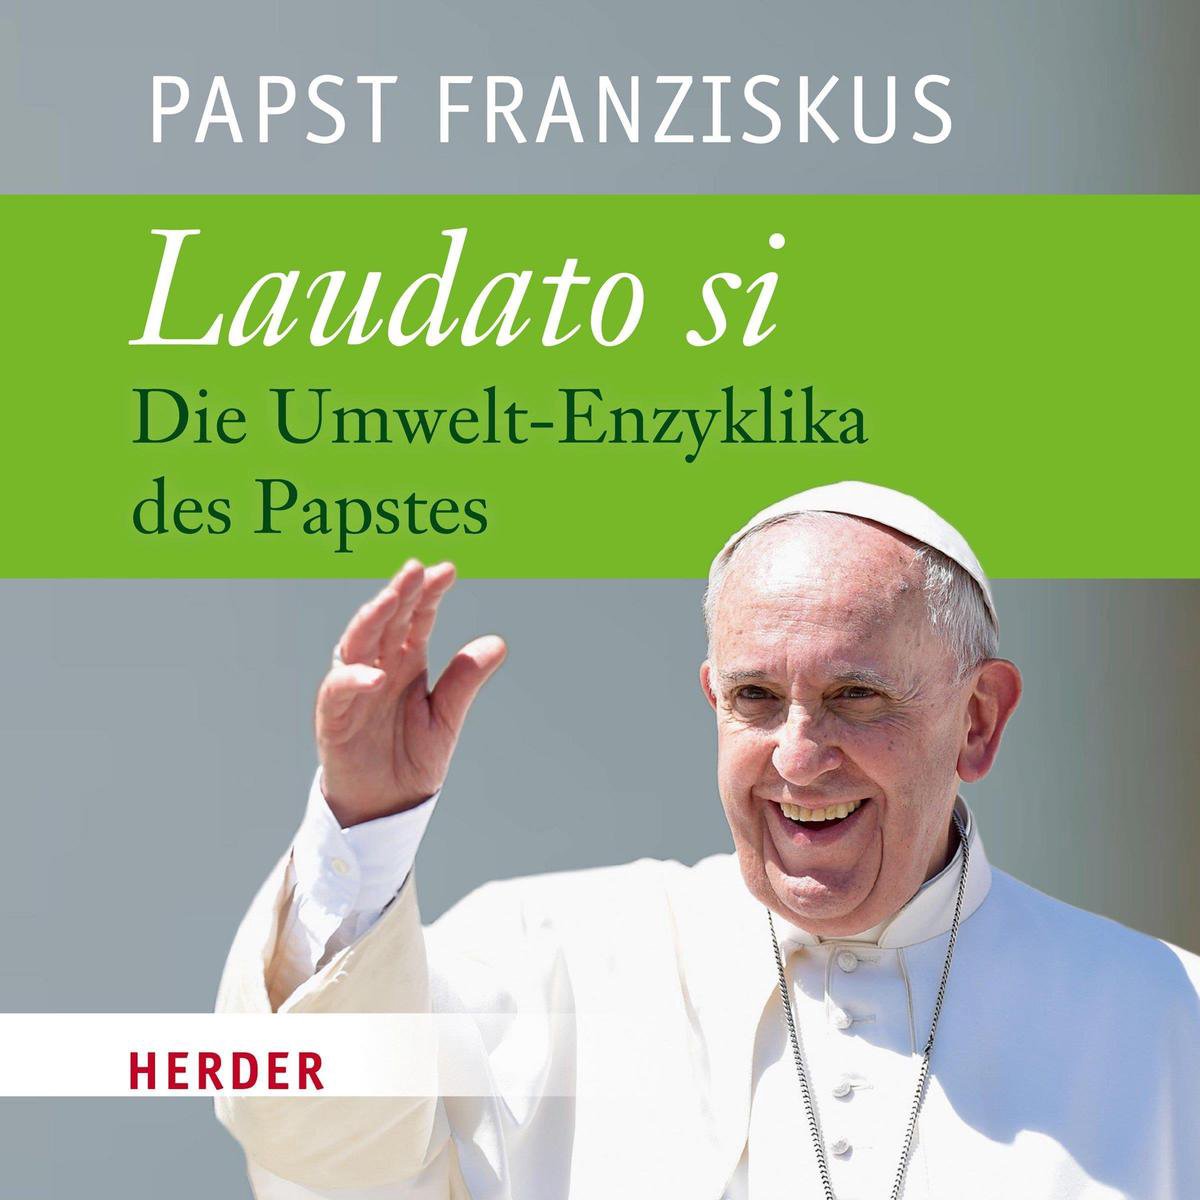 Laudato si - Papst Franziskus